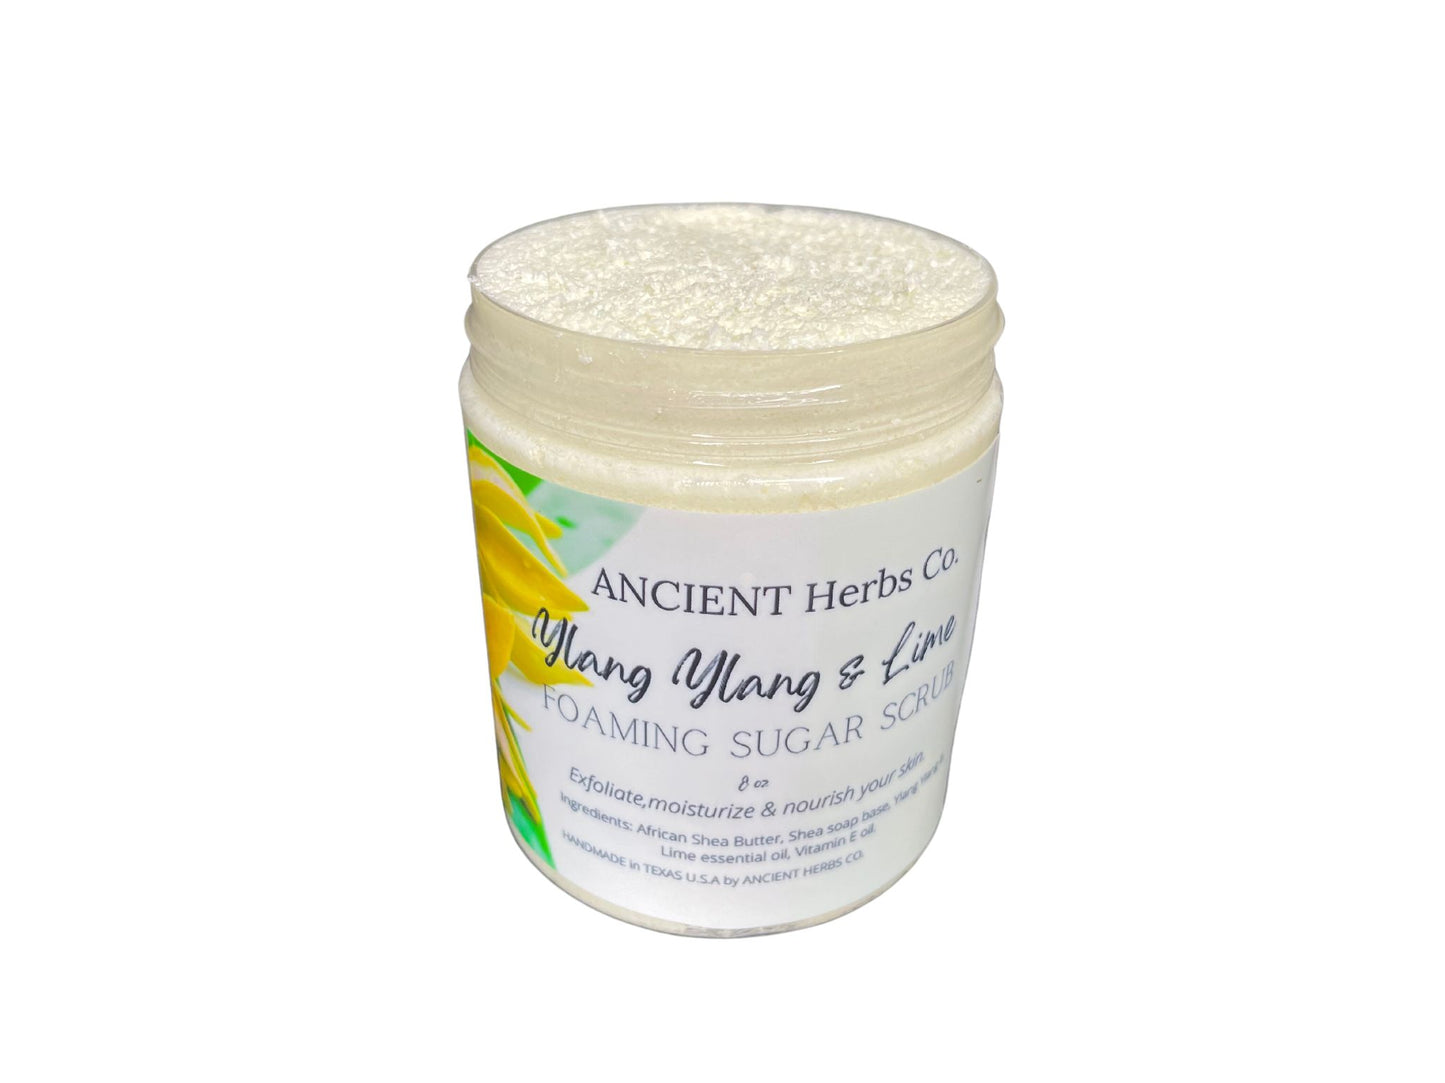 Ylang ylang & Lime Body Scrub 8 oz